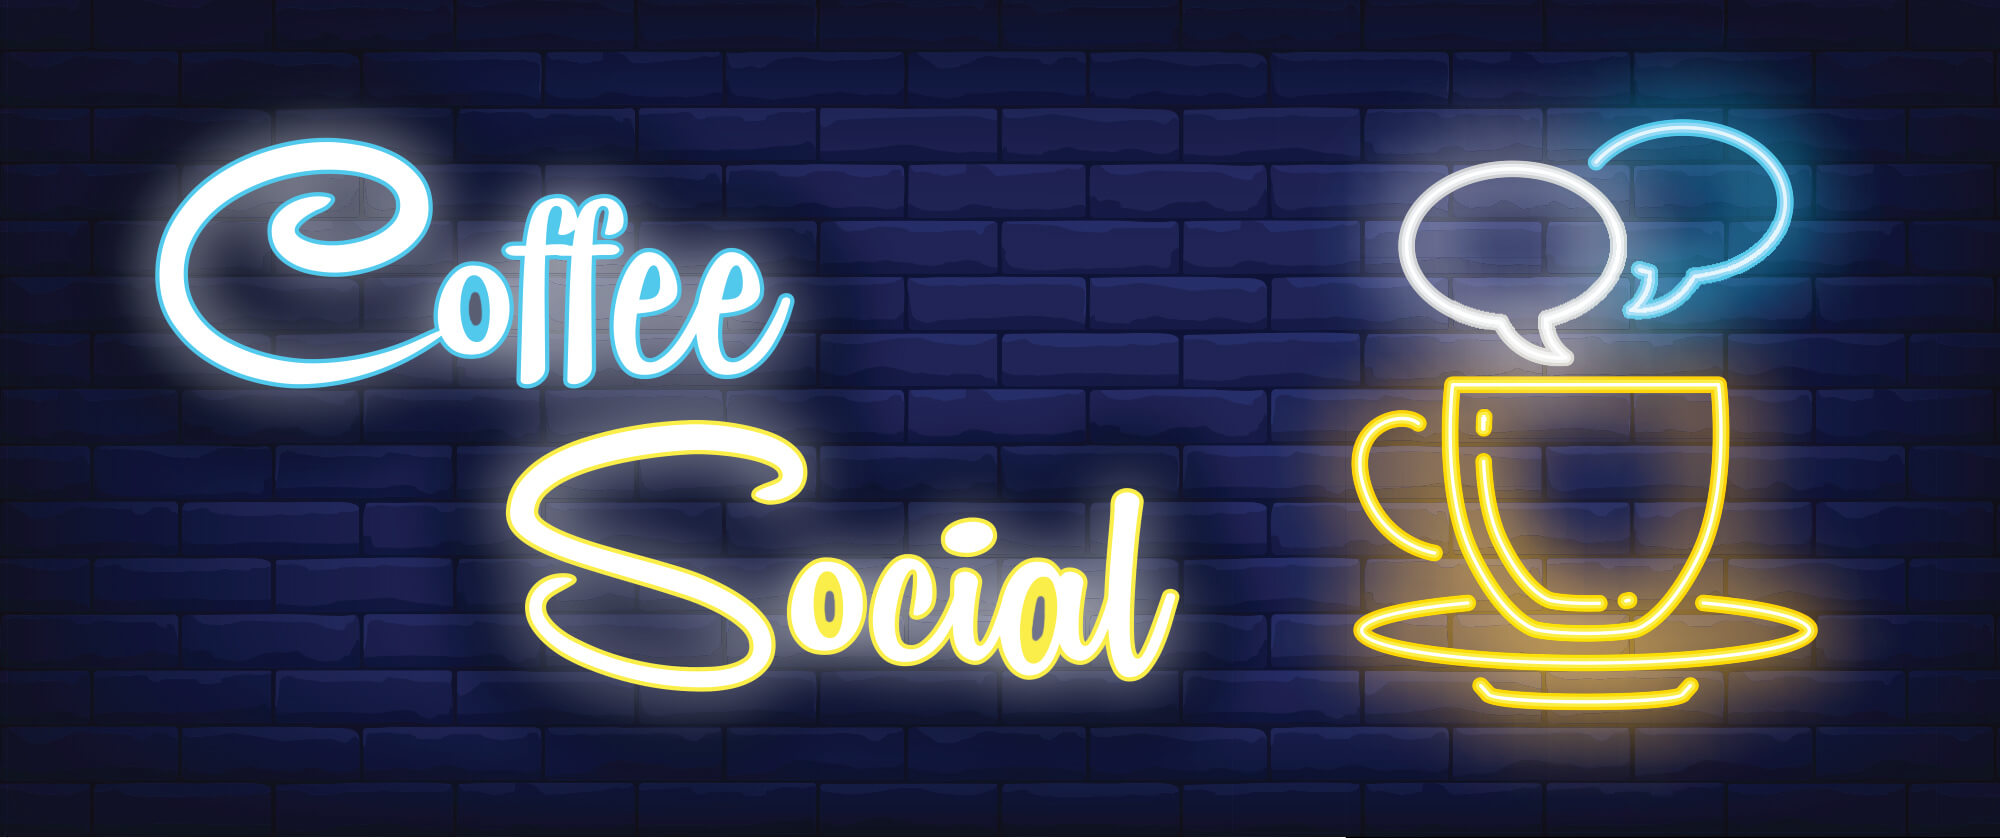 Coffee Social